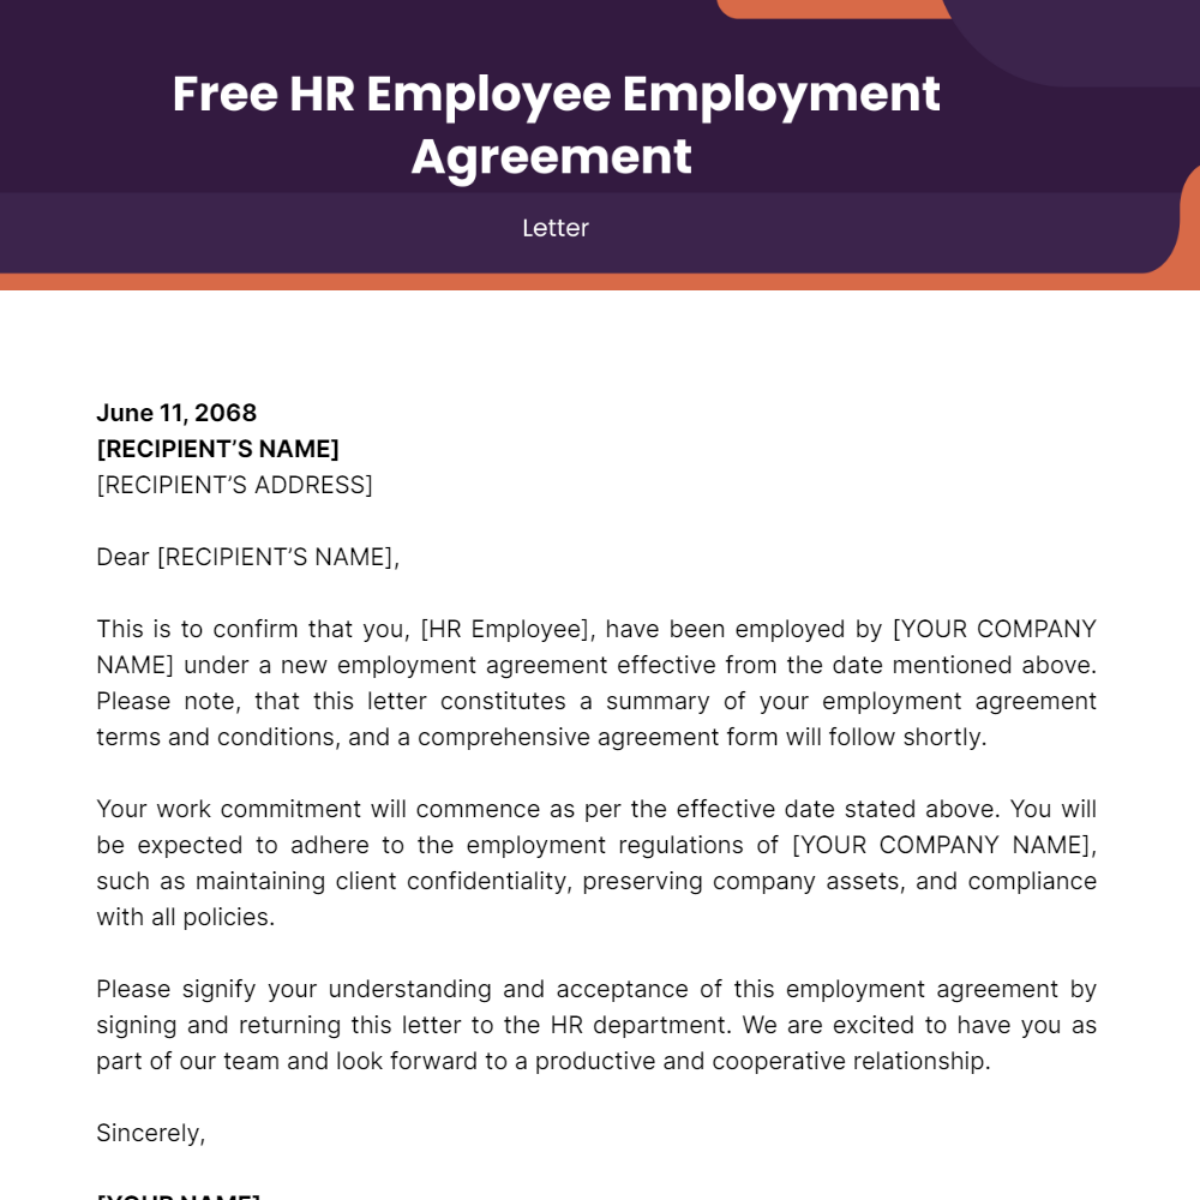 HR Employee Employment Agreement Letter Template